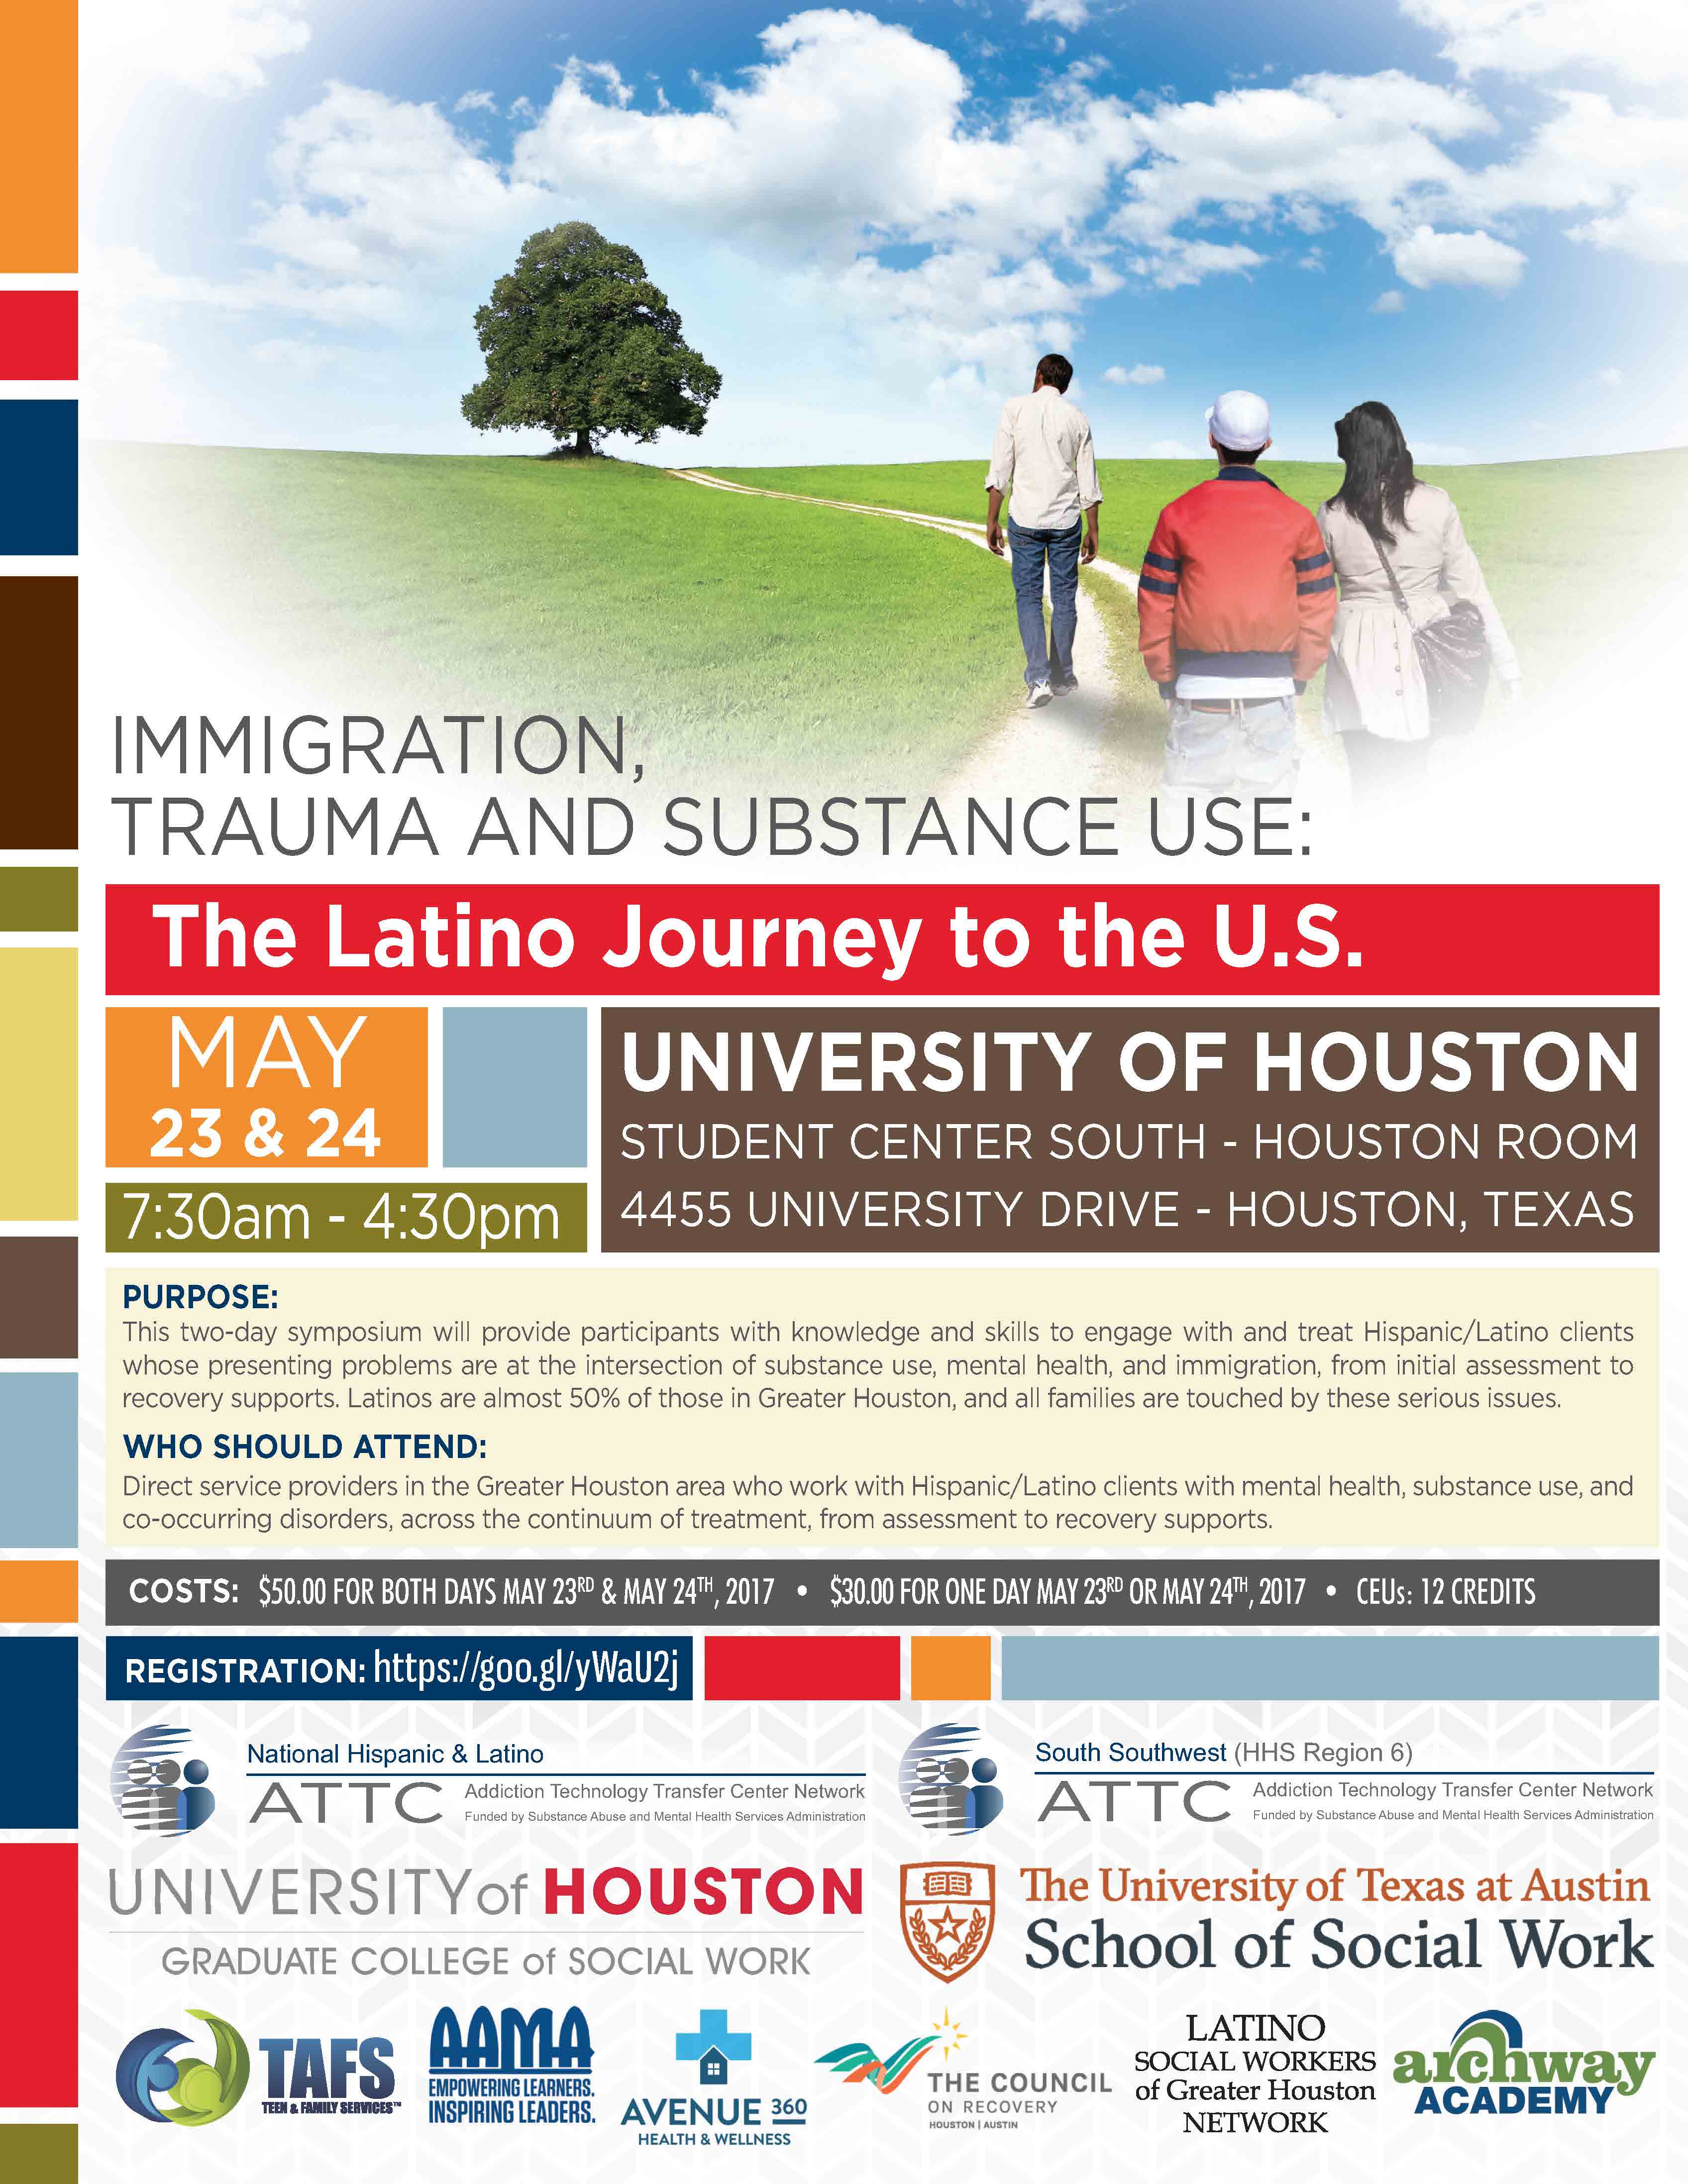 The Latino Journey to the US Symposium